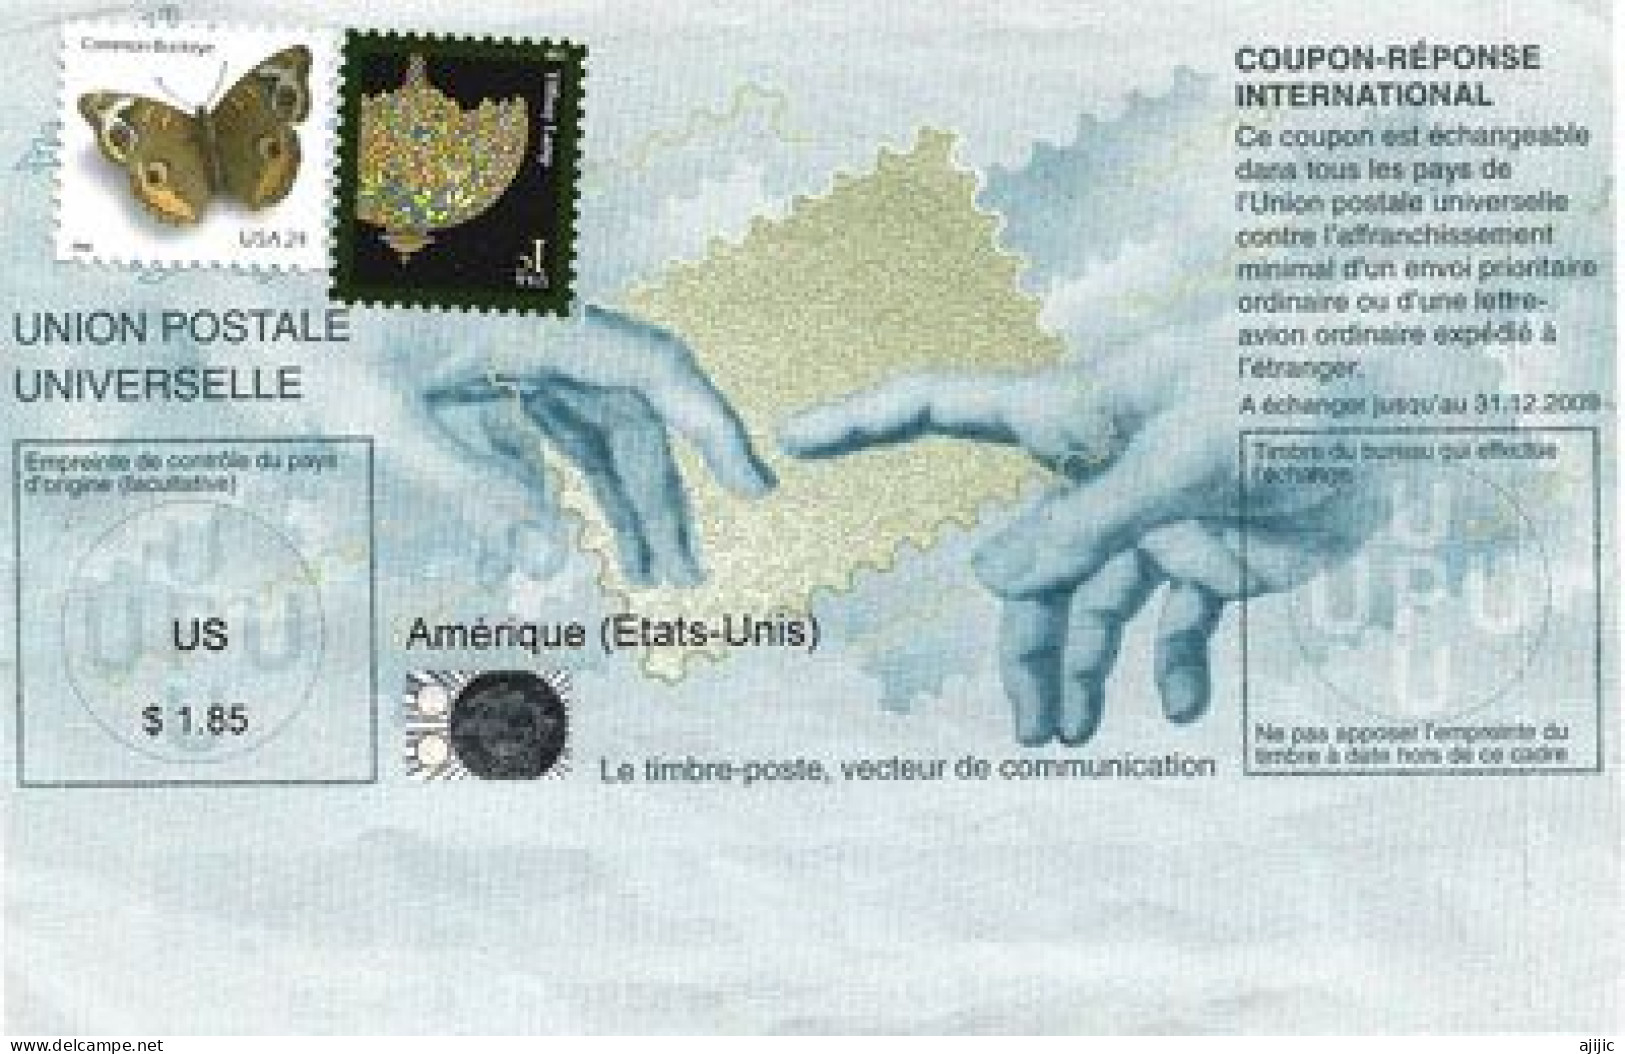 ETATS-UNIS. COUPON-REPONSE AMERICAIN 2009. IRC'S (USA) 2009 - UPU (Universal Postal Union)